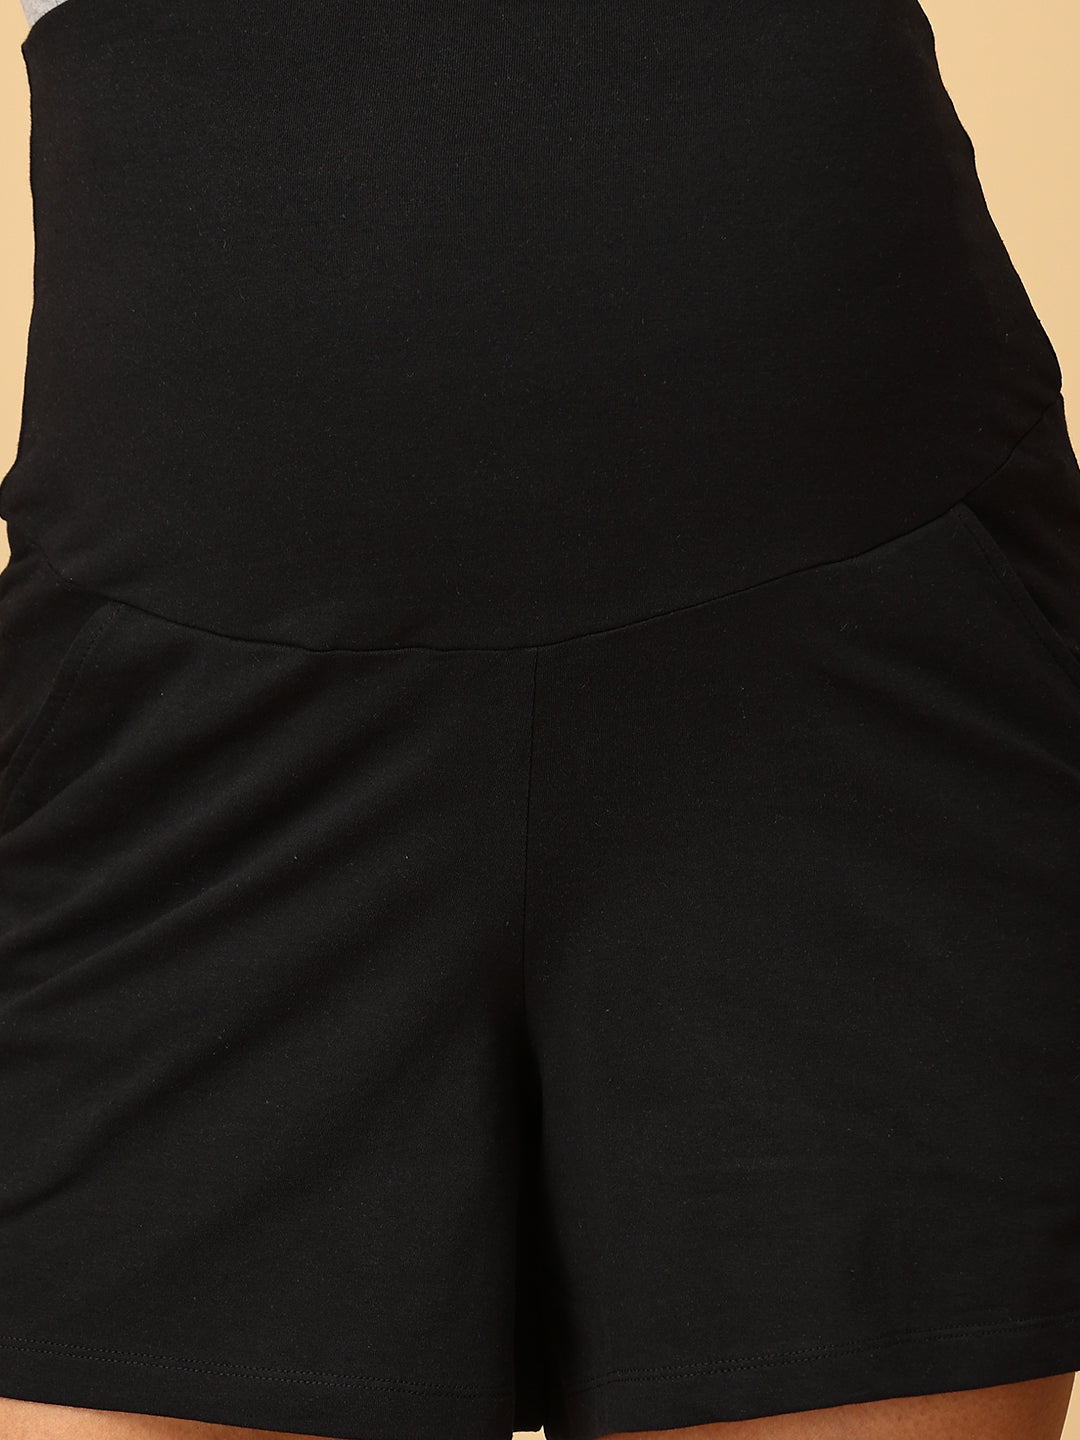 Comfy Maternity Shorts- Black